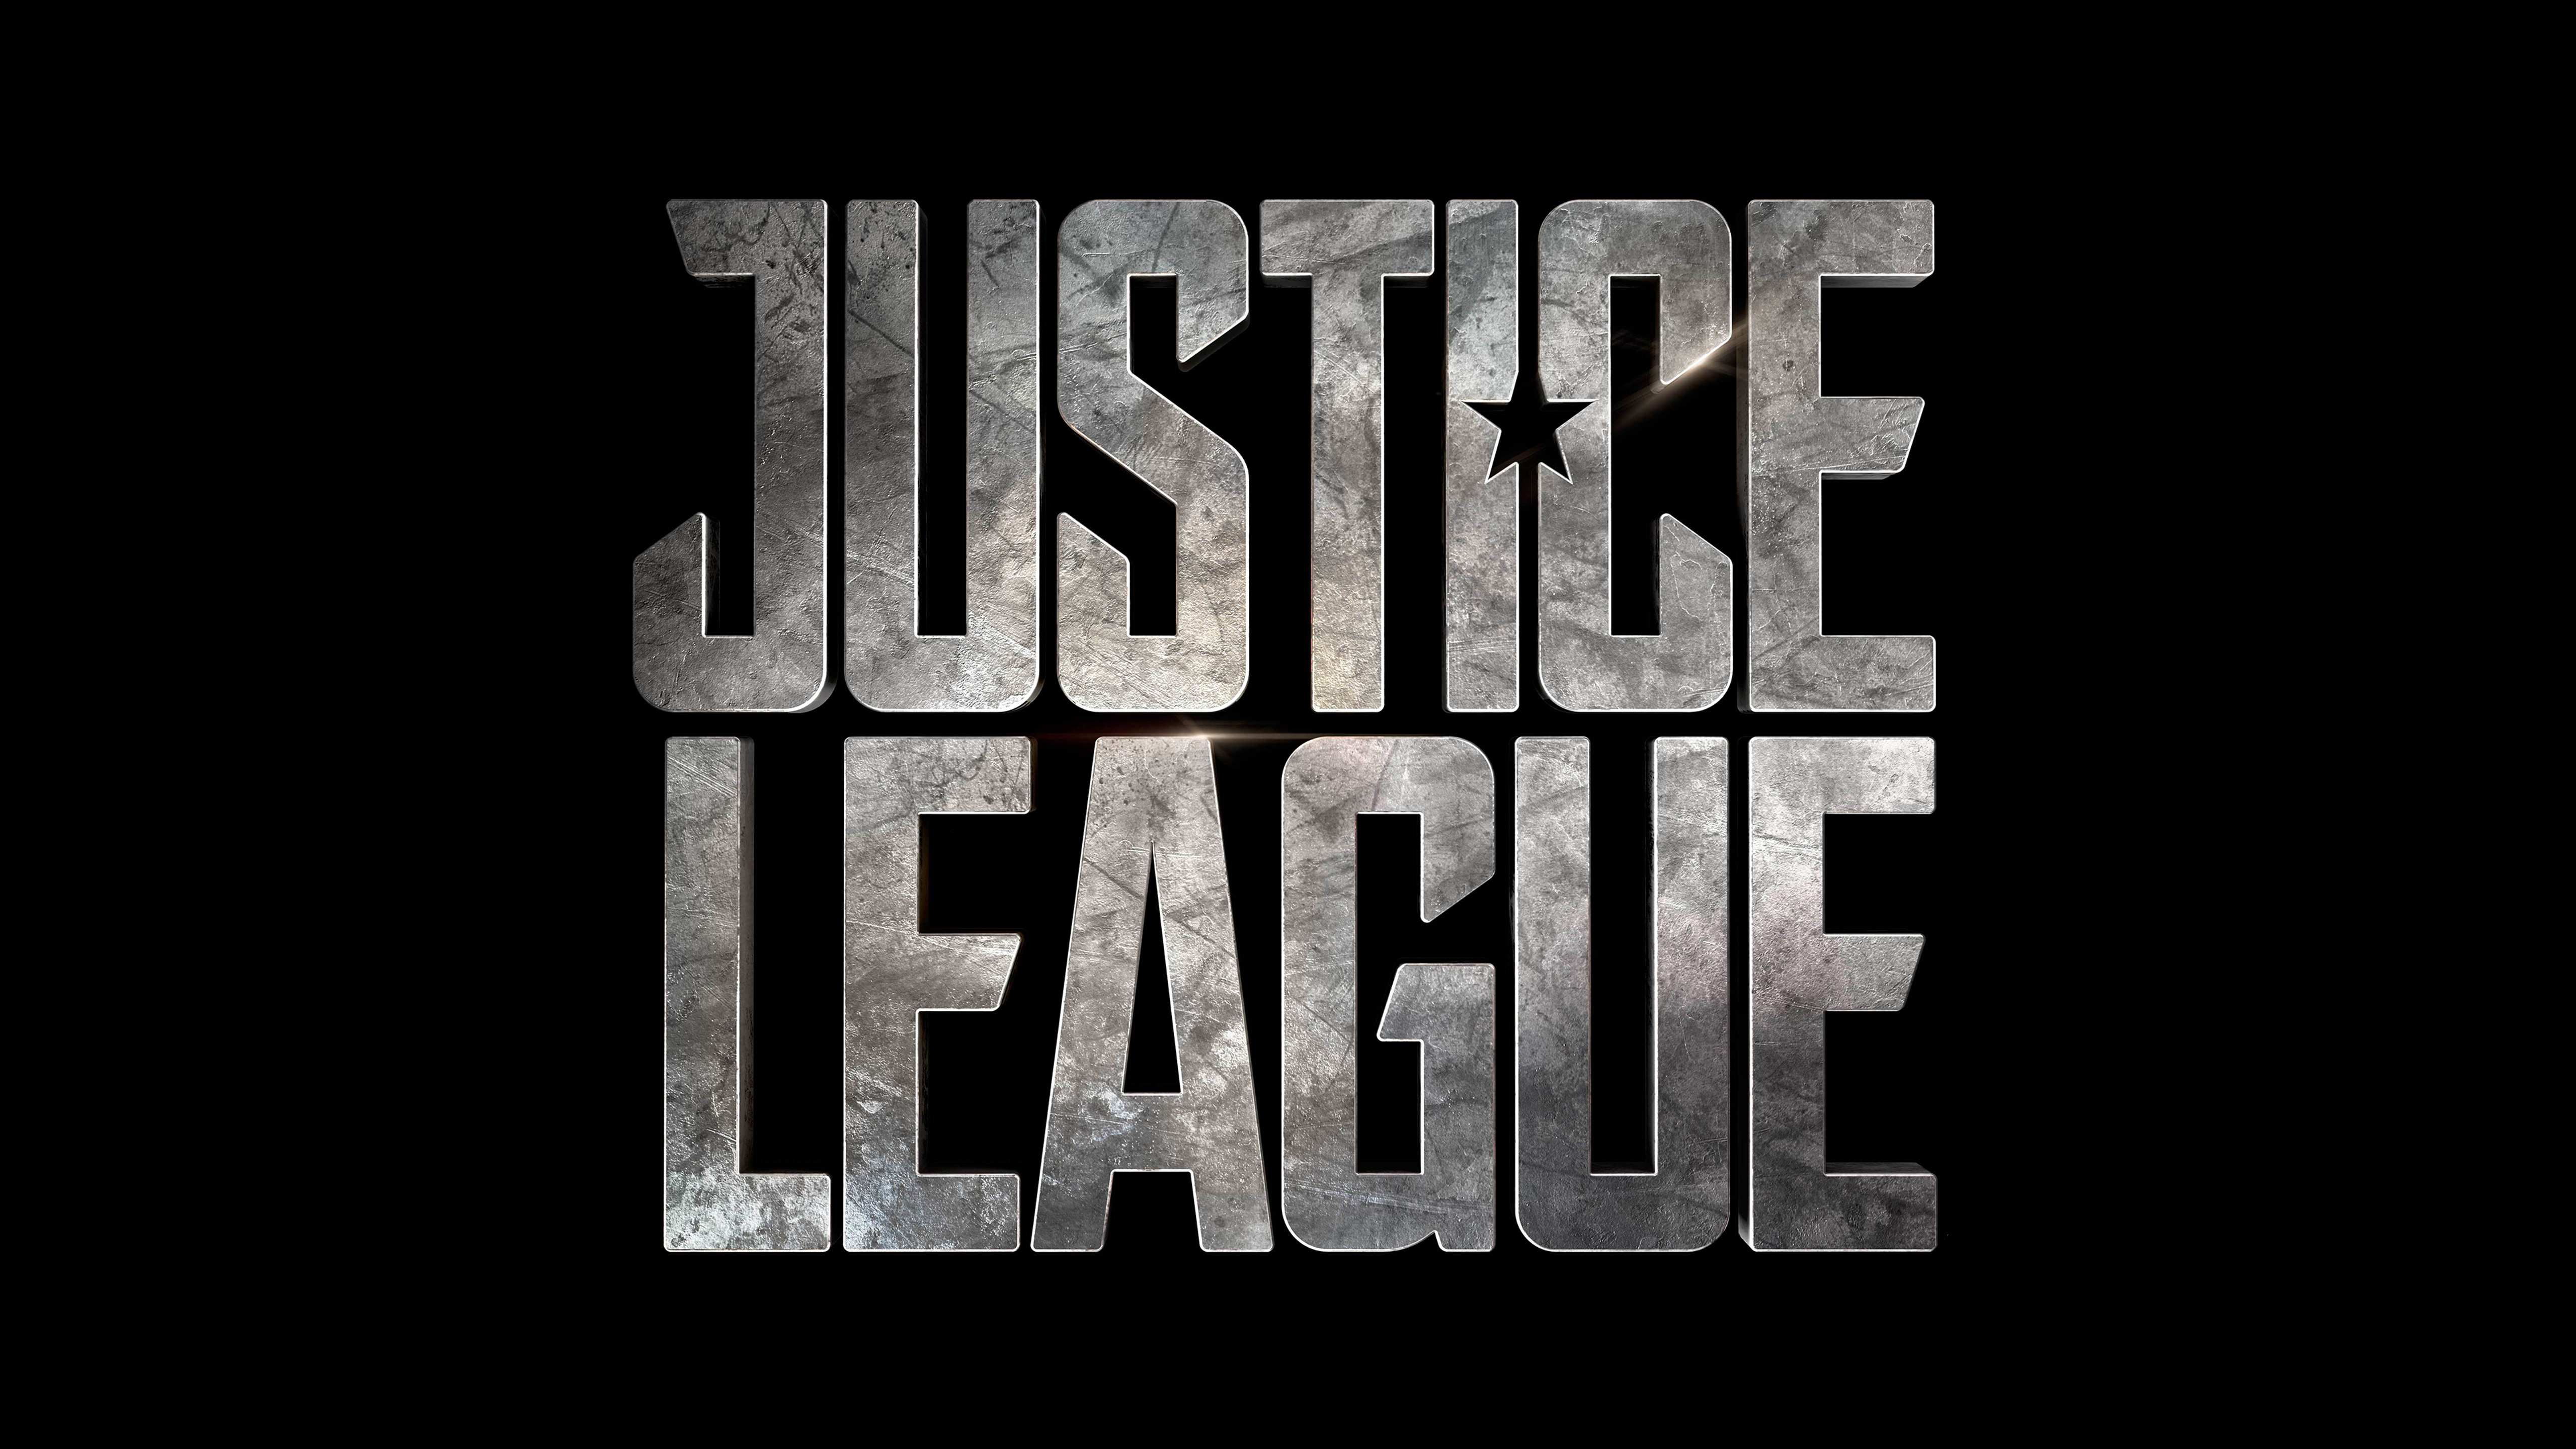 justice league logo wallpaper,font,text,black,logo,graphic design